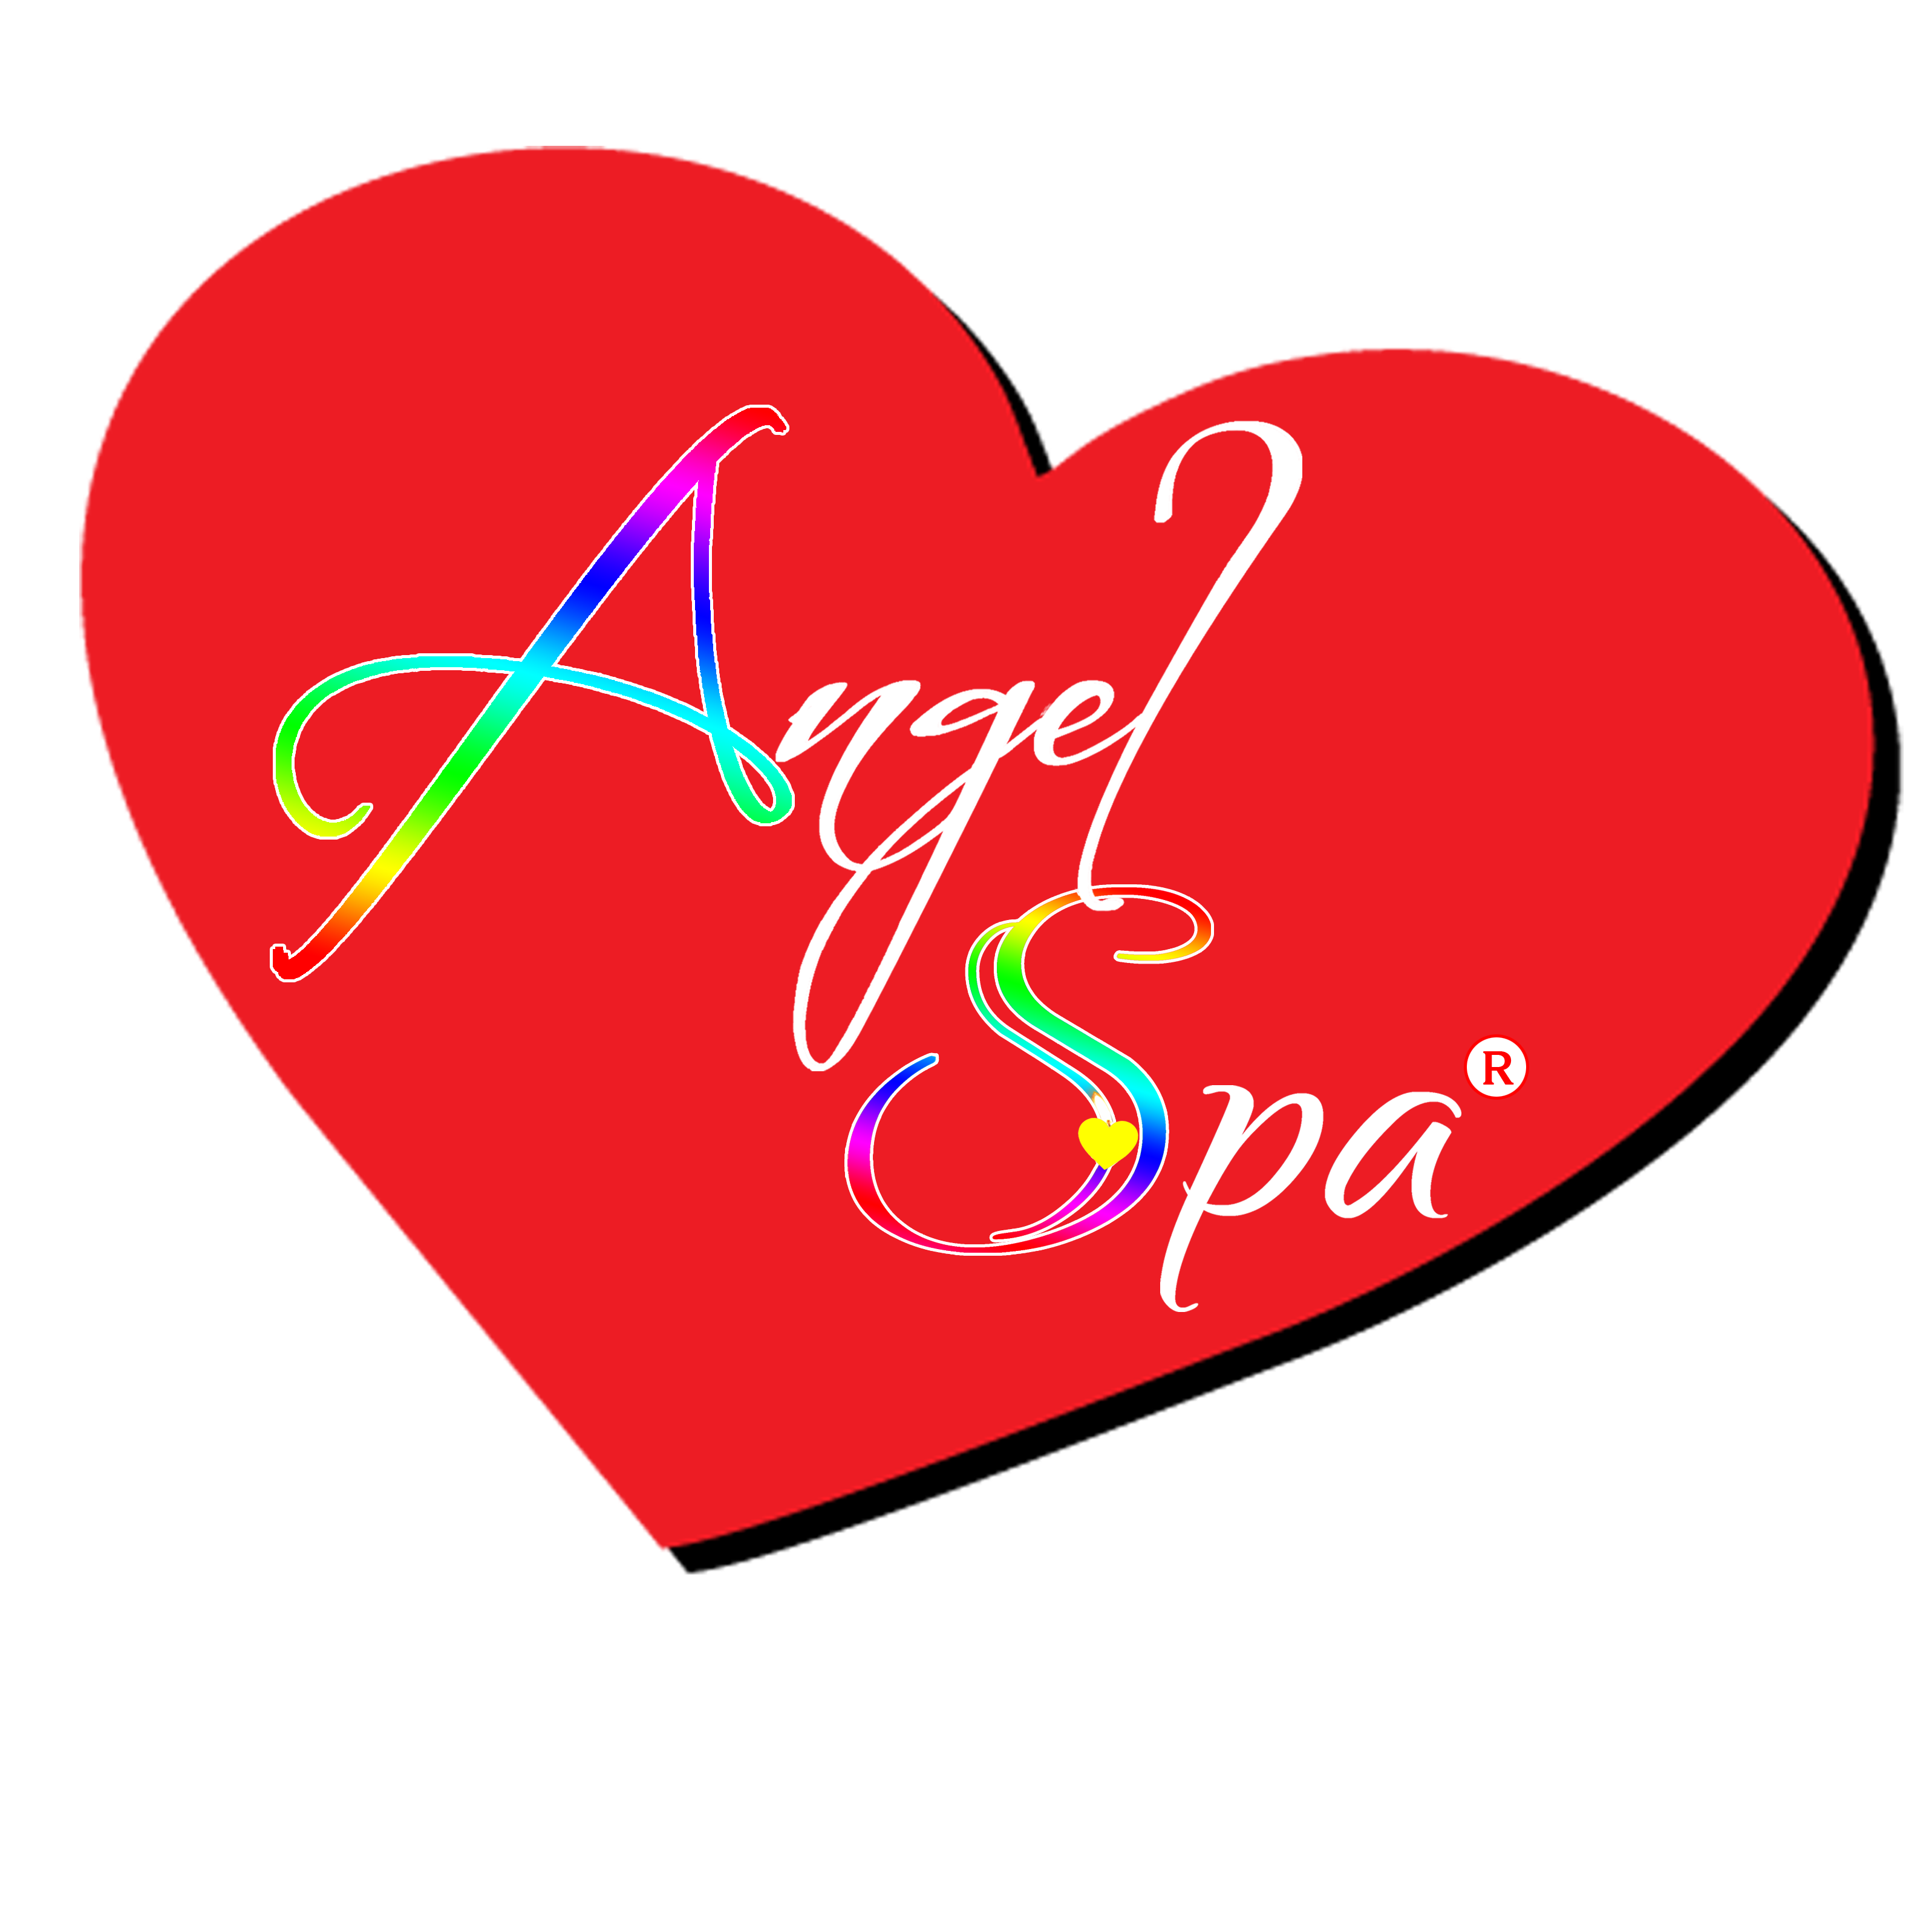 Angel Spa_The Best Massage Destination On Earth! - Stanton, CA 90680 - (714)897-7779 | ShowMeLocal.com